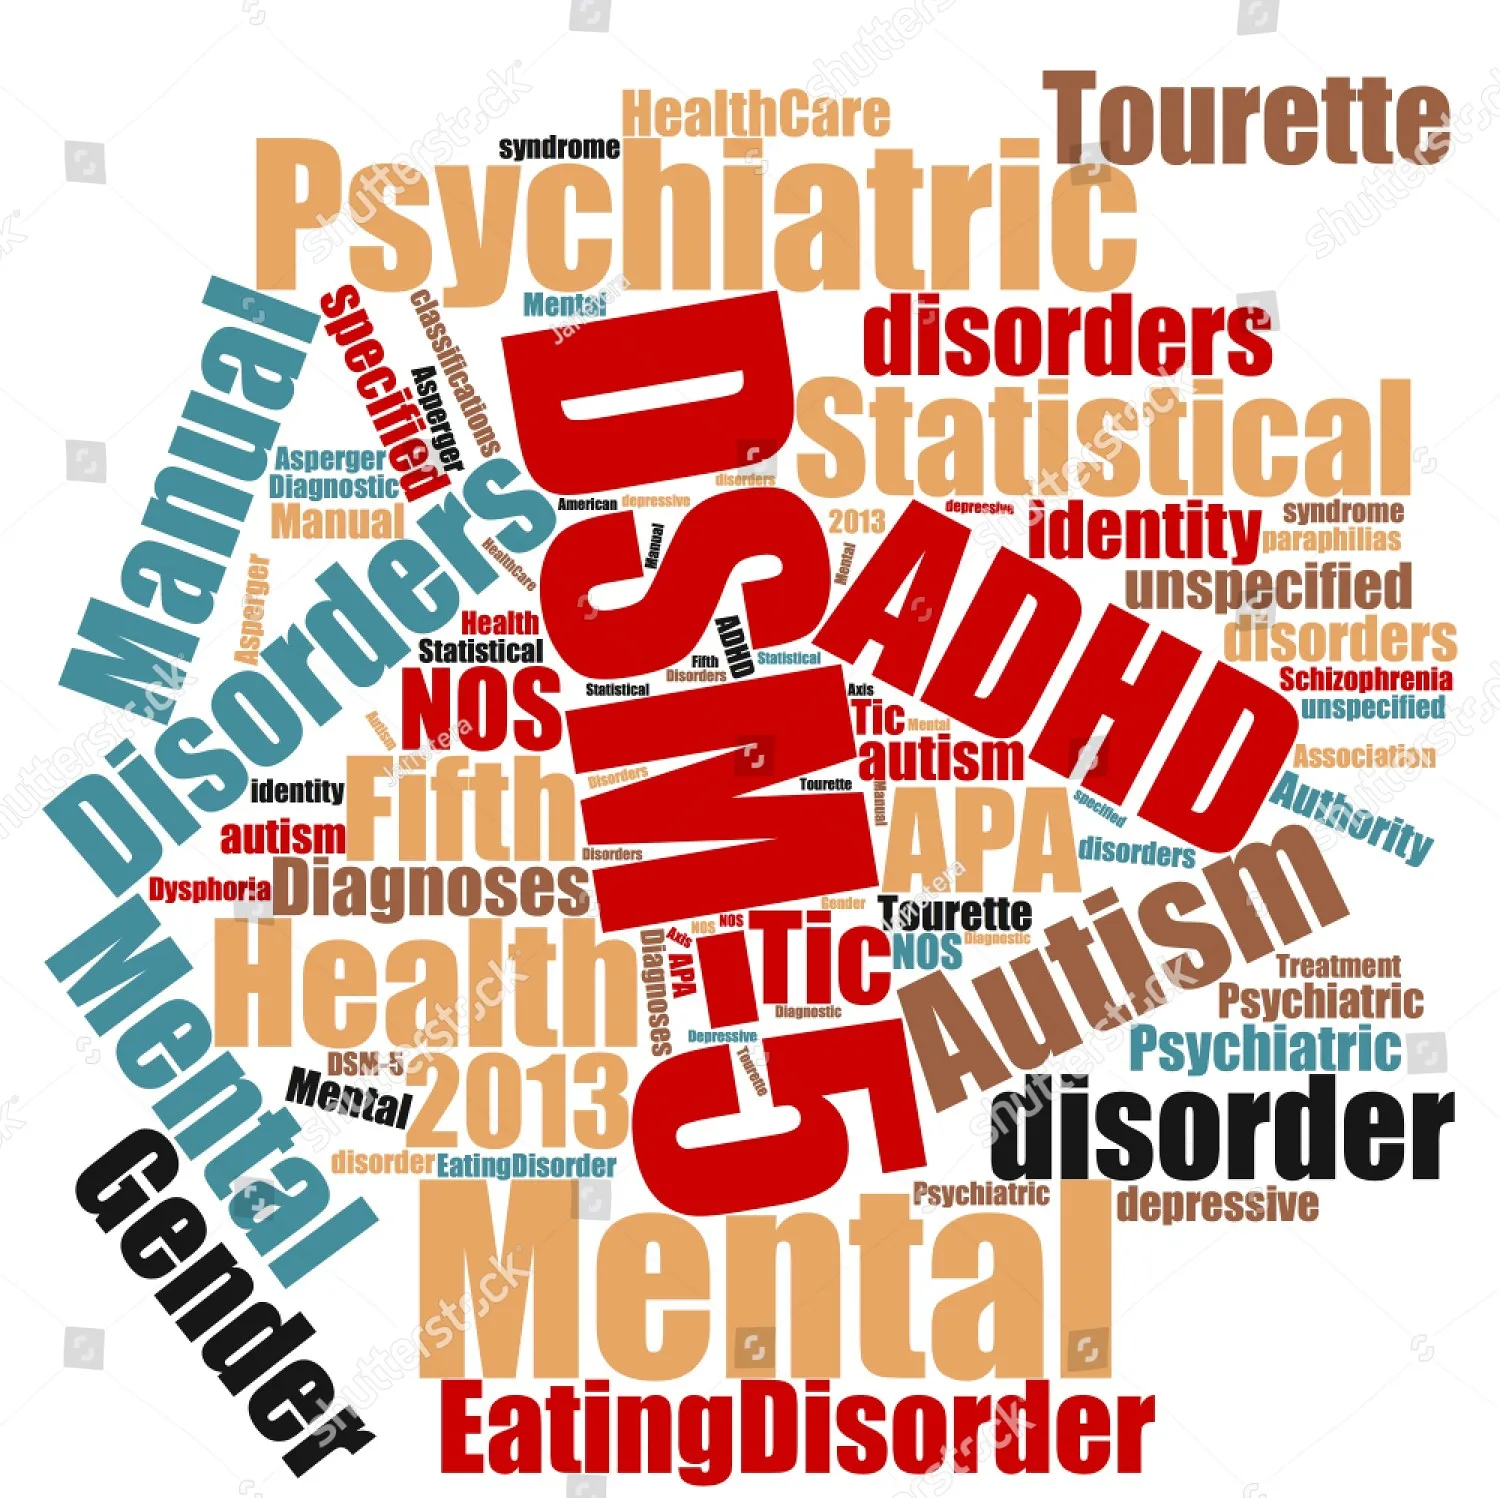 American Psychiatric Association Diagnostic and Statistical Manual of Mental Disorders (DSM)